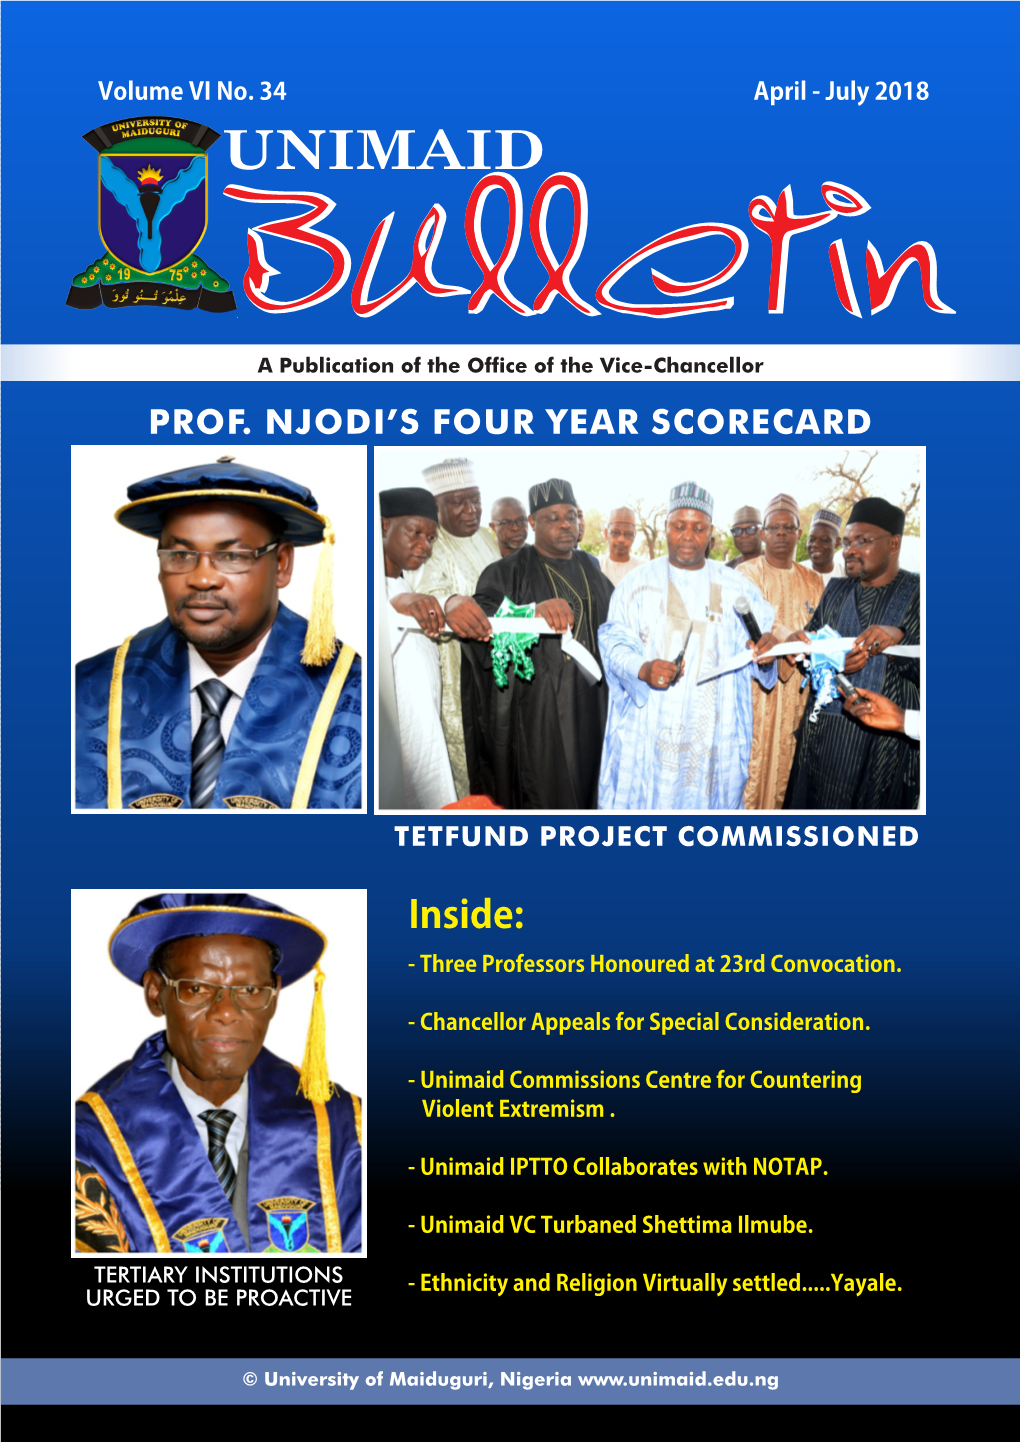 Prof. Njodi's Four Year Scorecard